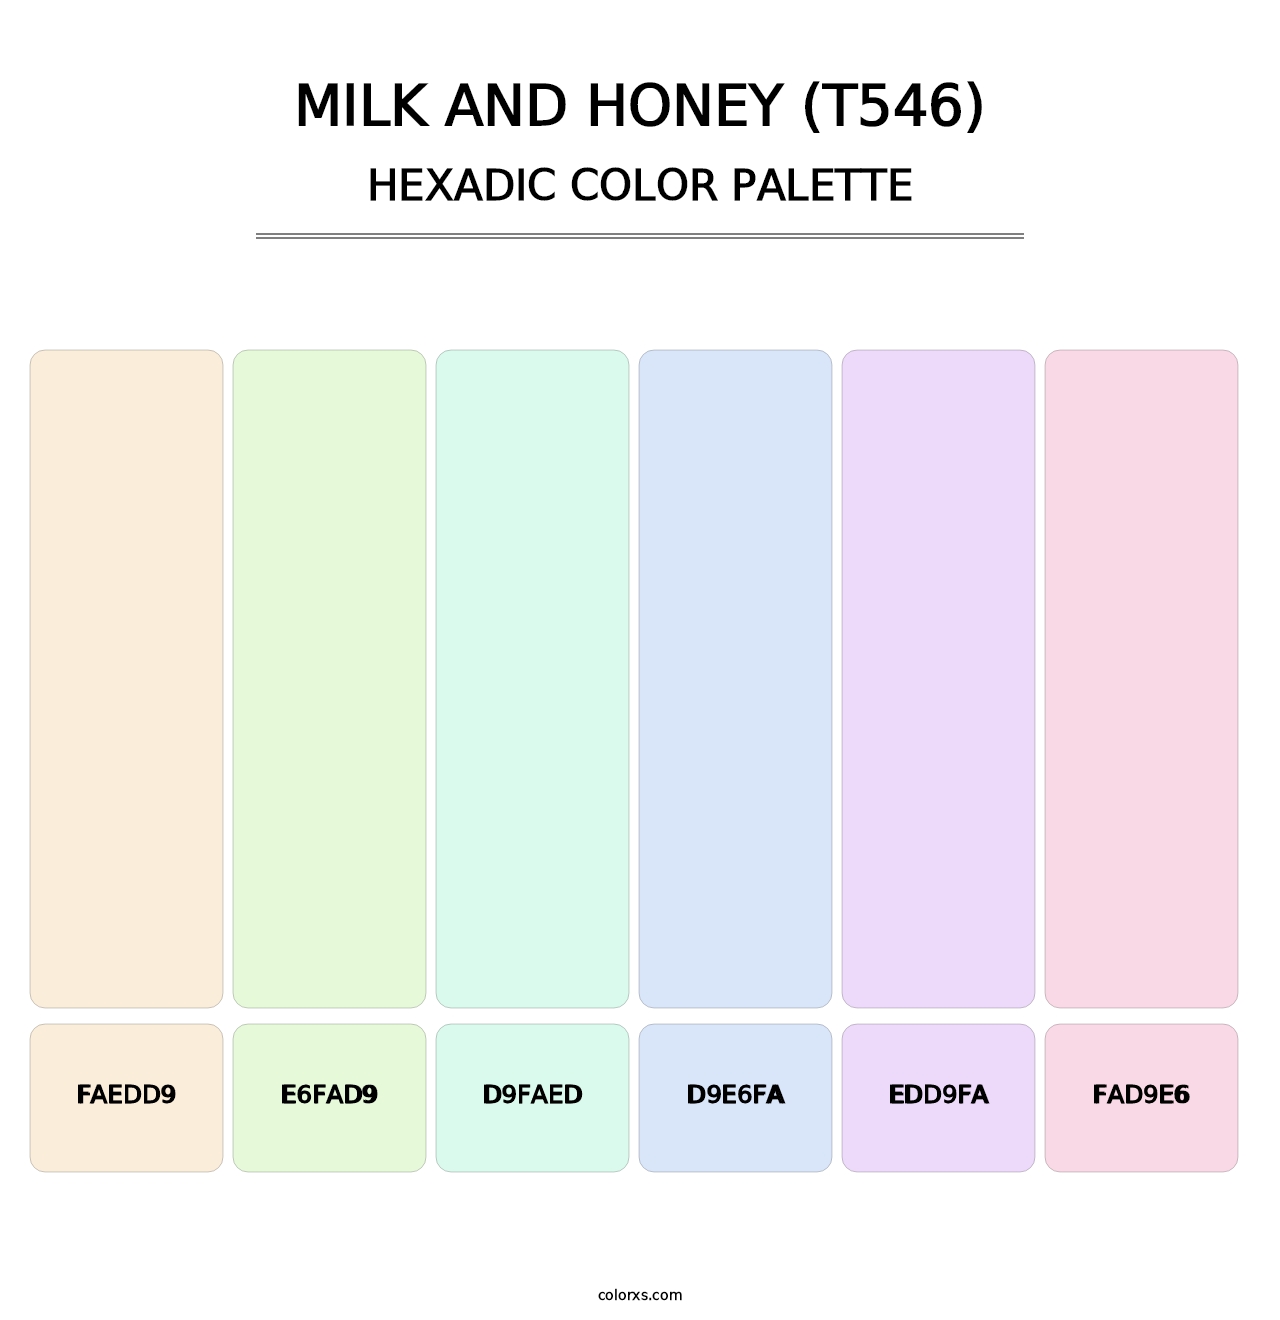 Milk and Honey (T546) - Hexadic Color Palette